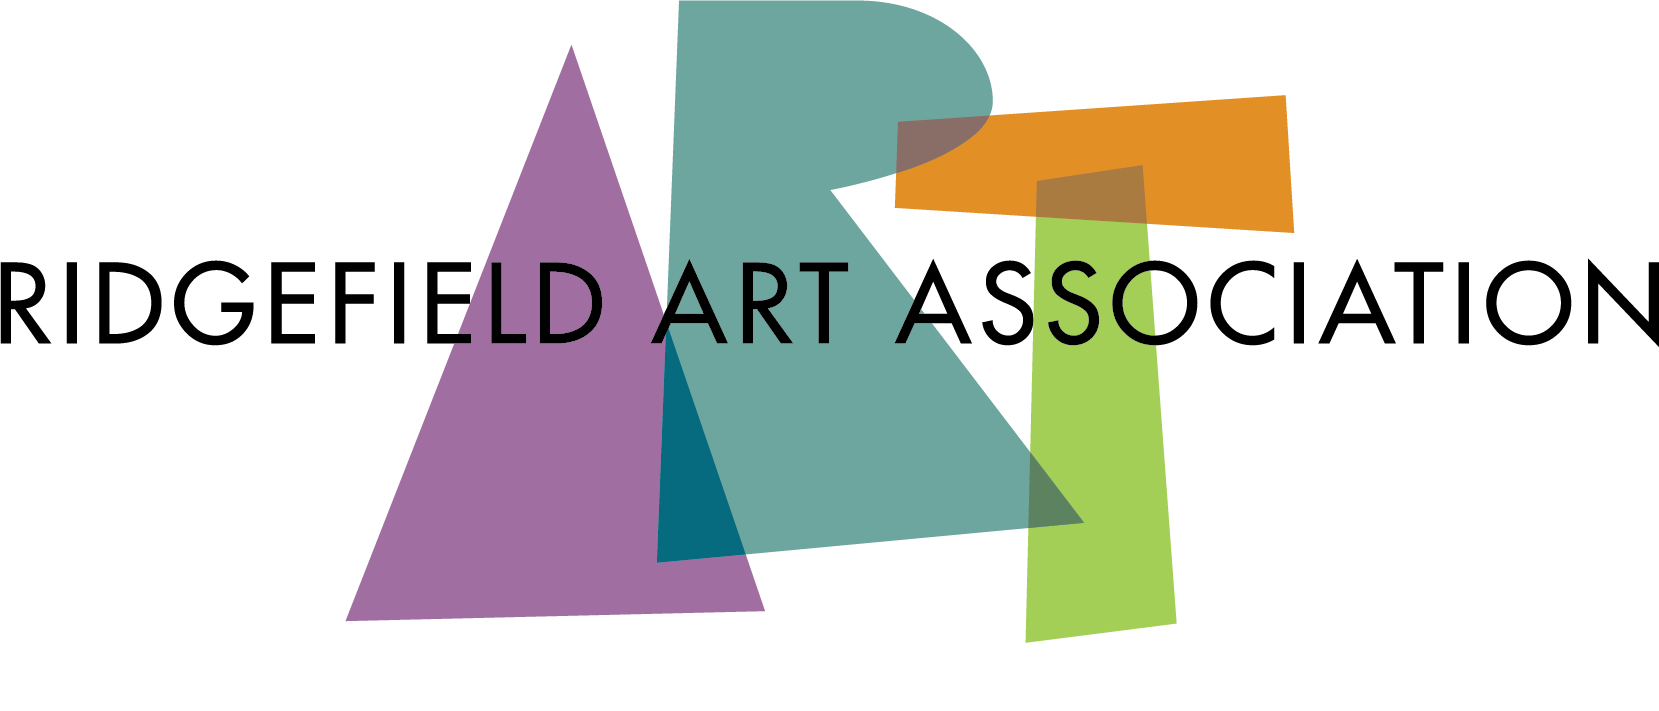 Ridgefield Arts Association Logo